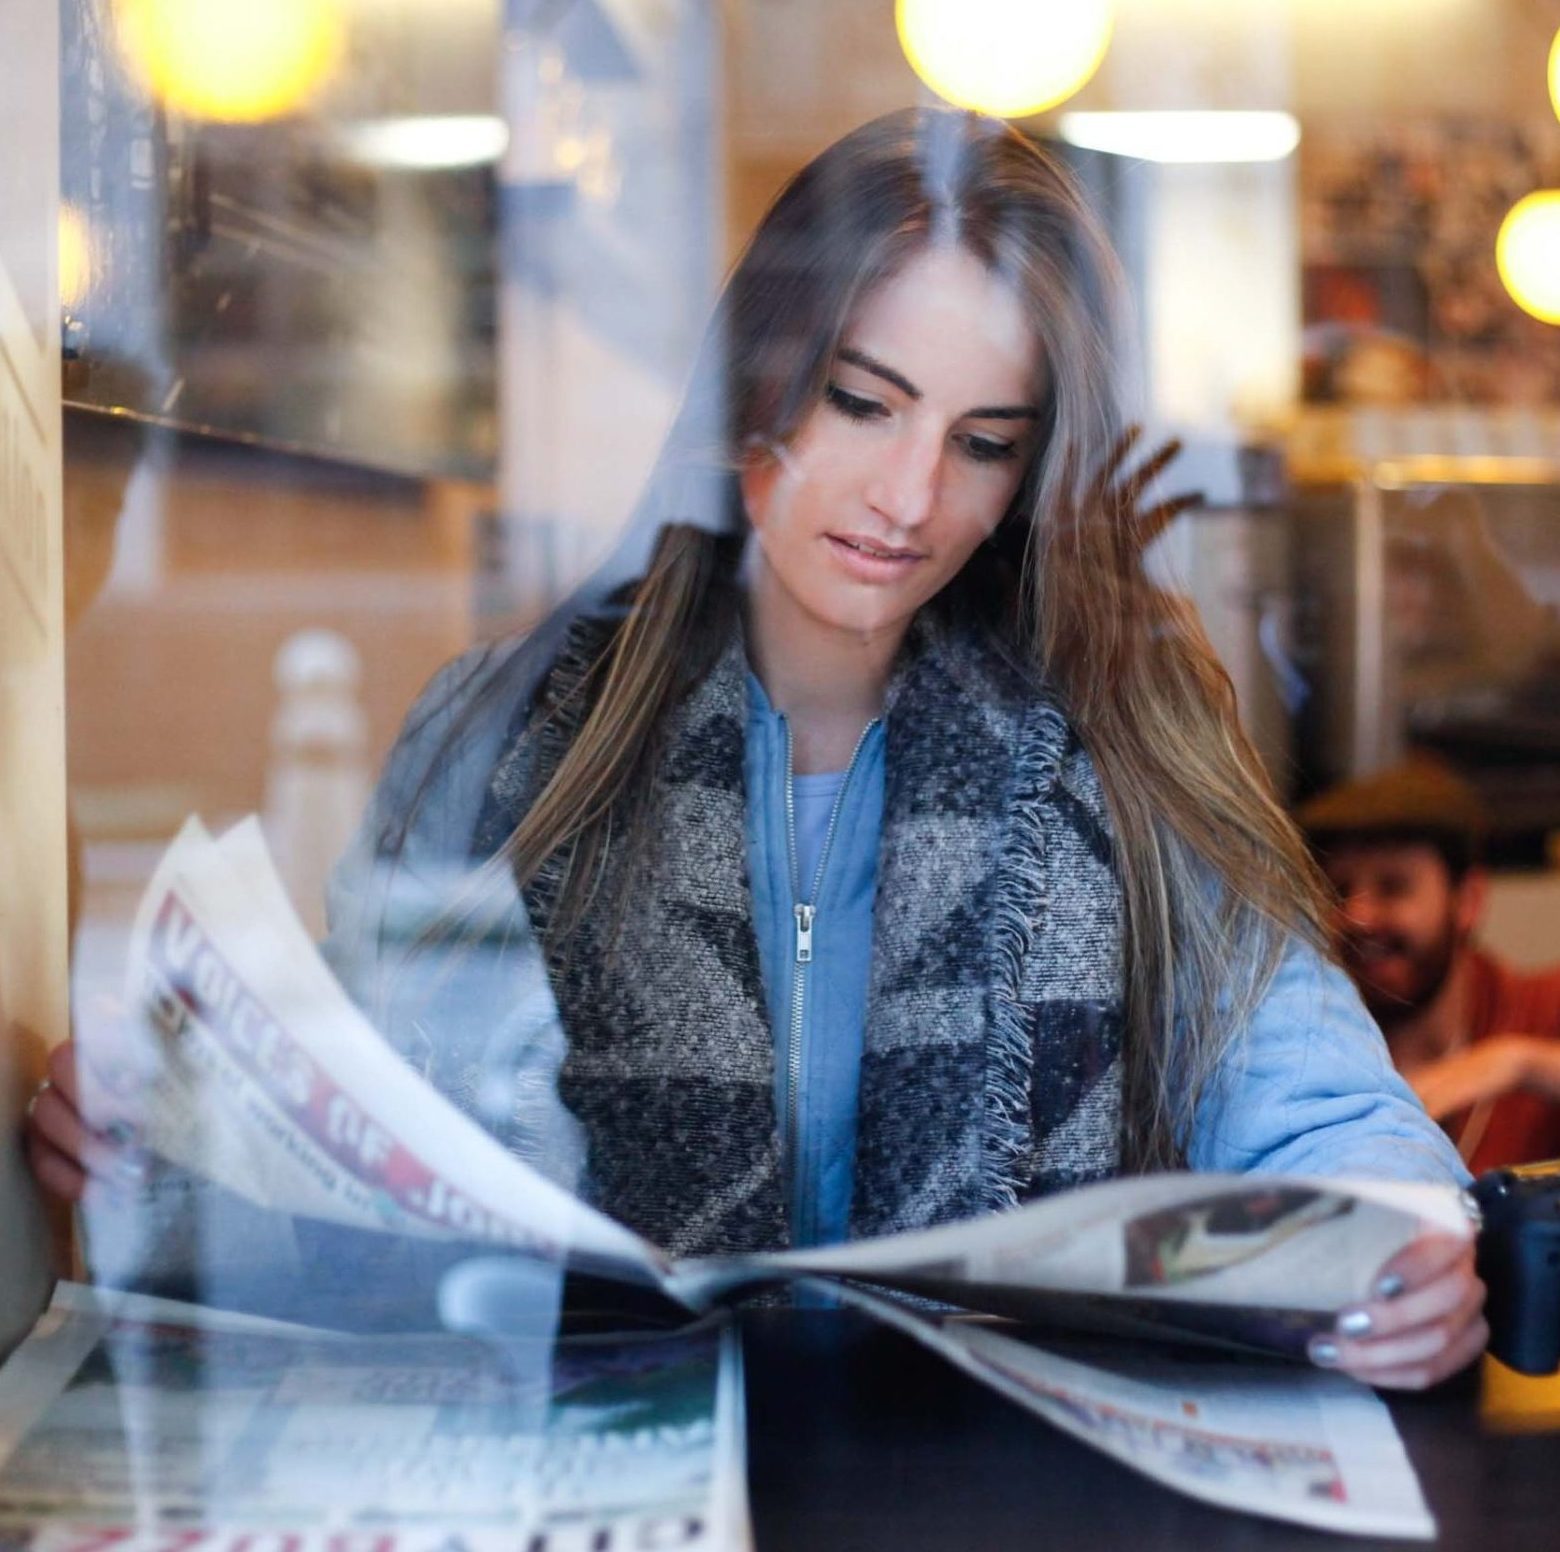 Woman reading a newspaper Keenan Constance on Unsplash